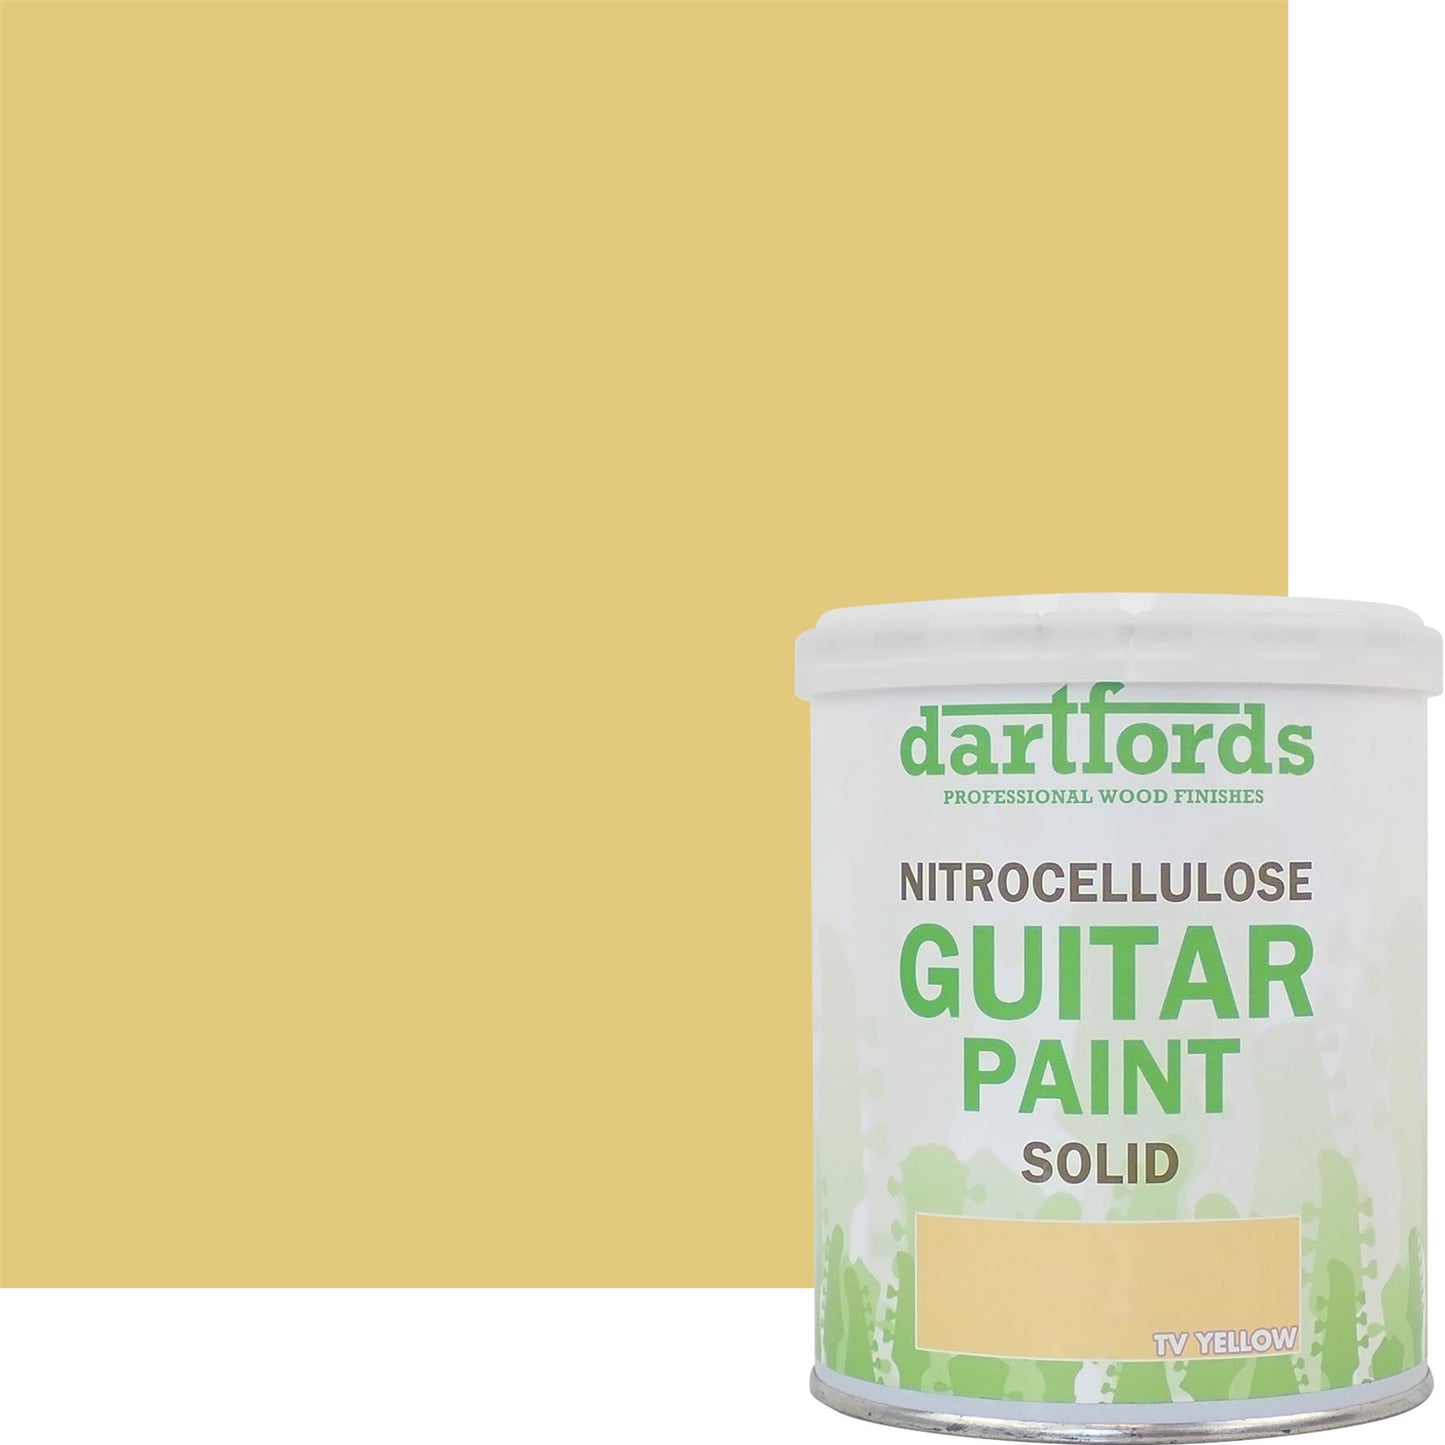 dartfords TV Yellow Nitrocellulose Guitar Paint - 1 litre Tin